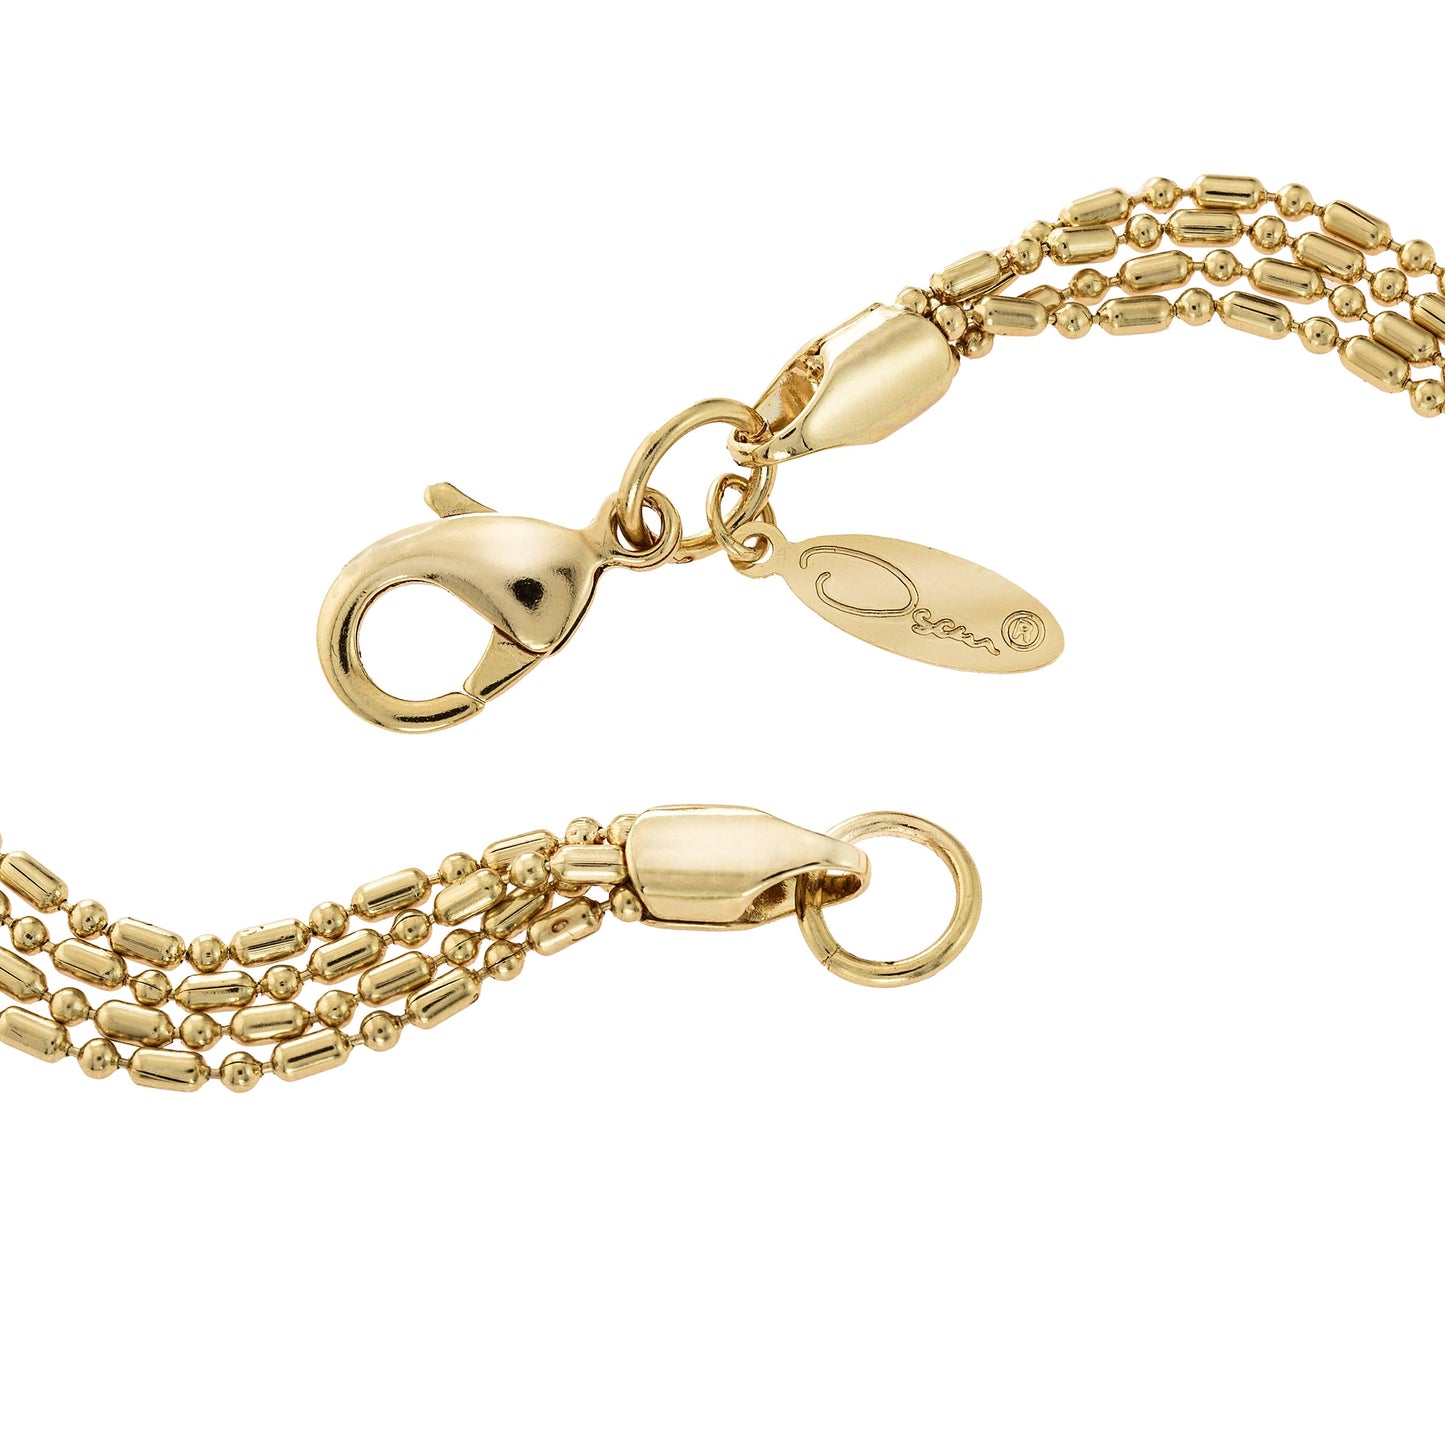 A Vintage Oscar De La Renta 24 Inch Gold Tone Heart Pendant Necklace #OSN-4619-W - Limited Stock - Never Worn